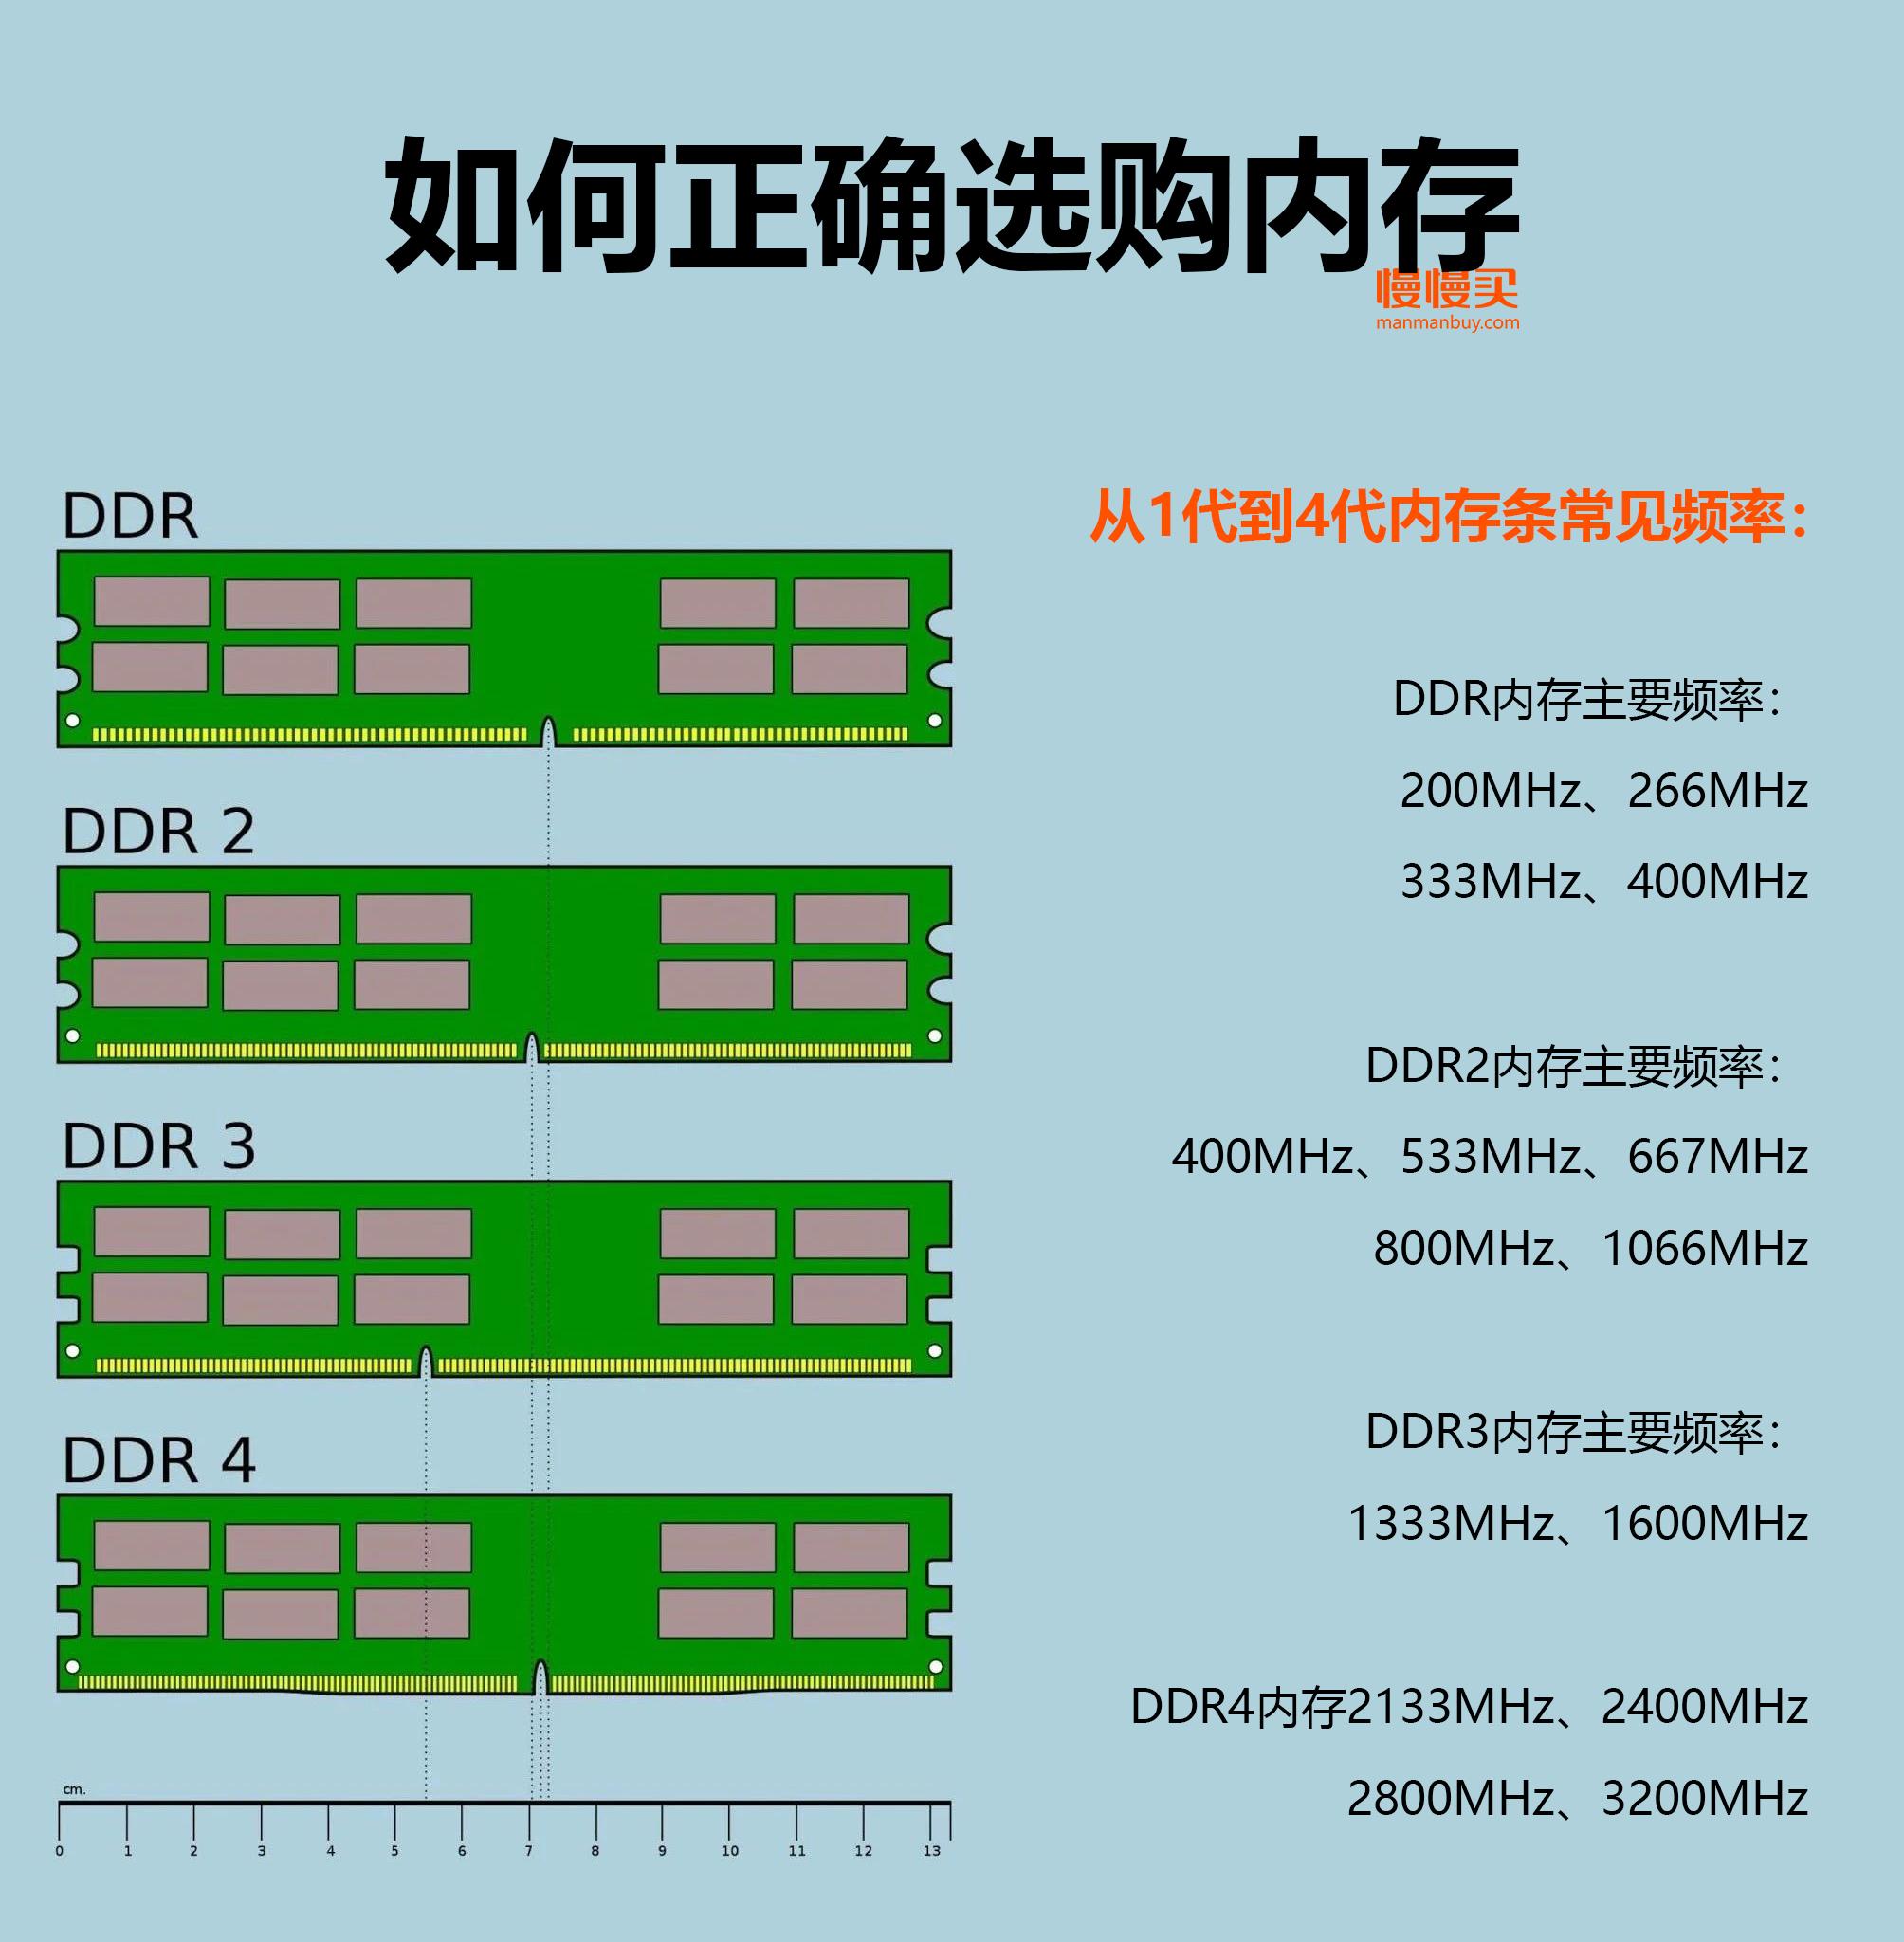 ddr2为什么是2100 深入探究 DDR2 内存 2100 系列，揭示其为电脑运行注入动力的奥秘  第1张